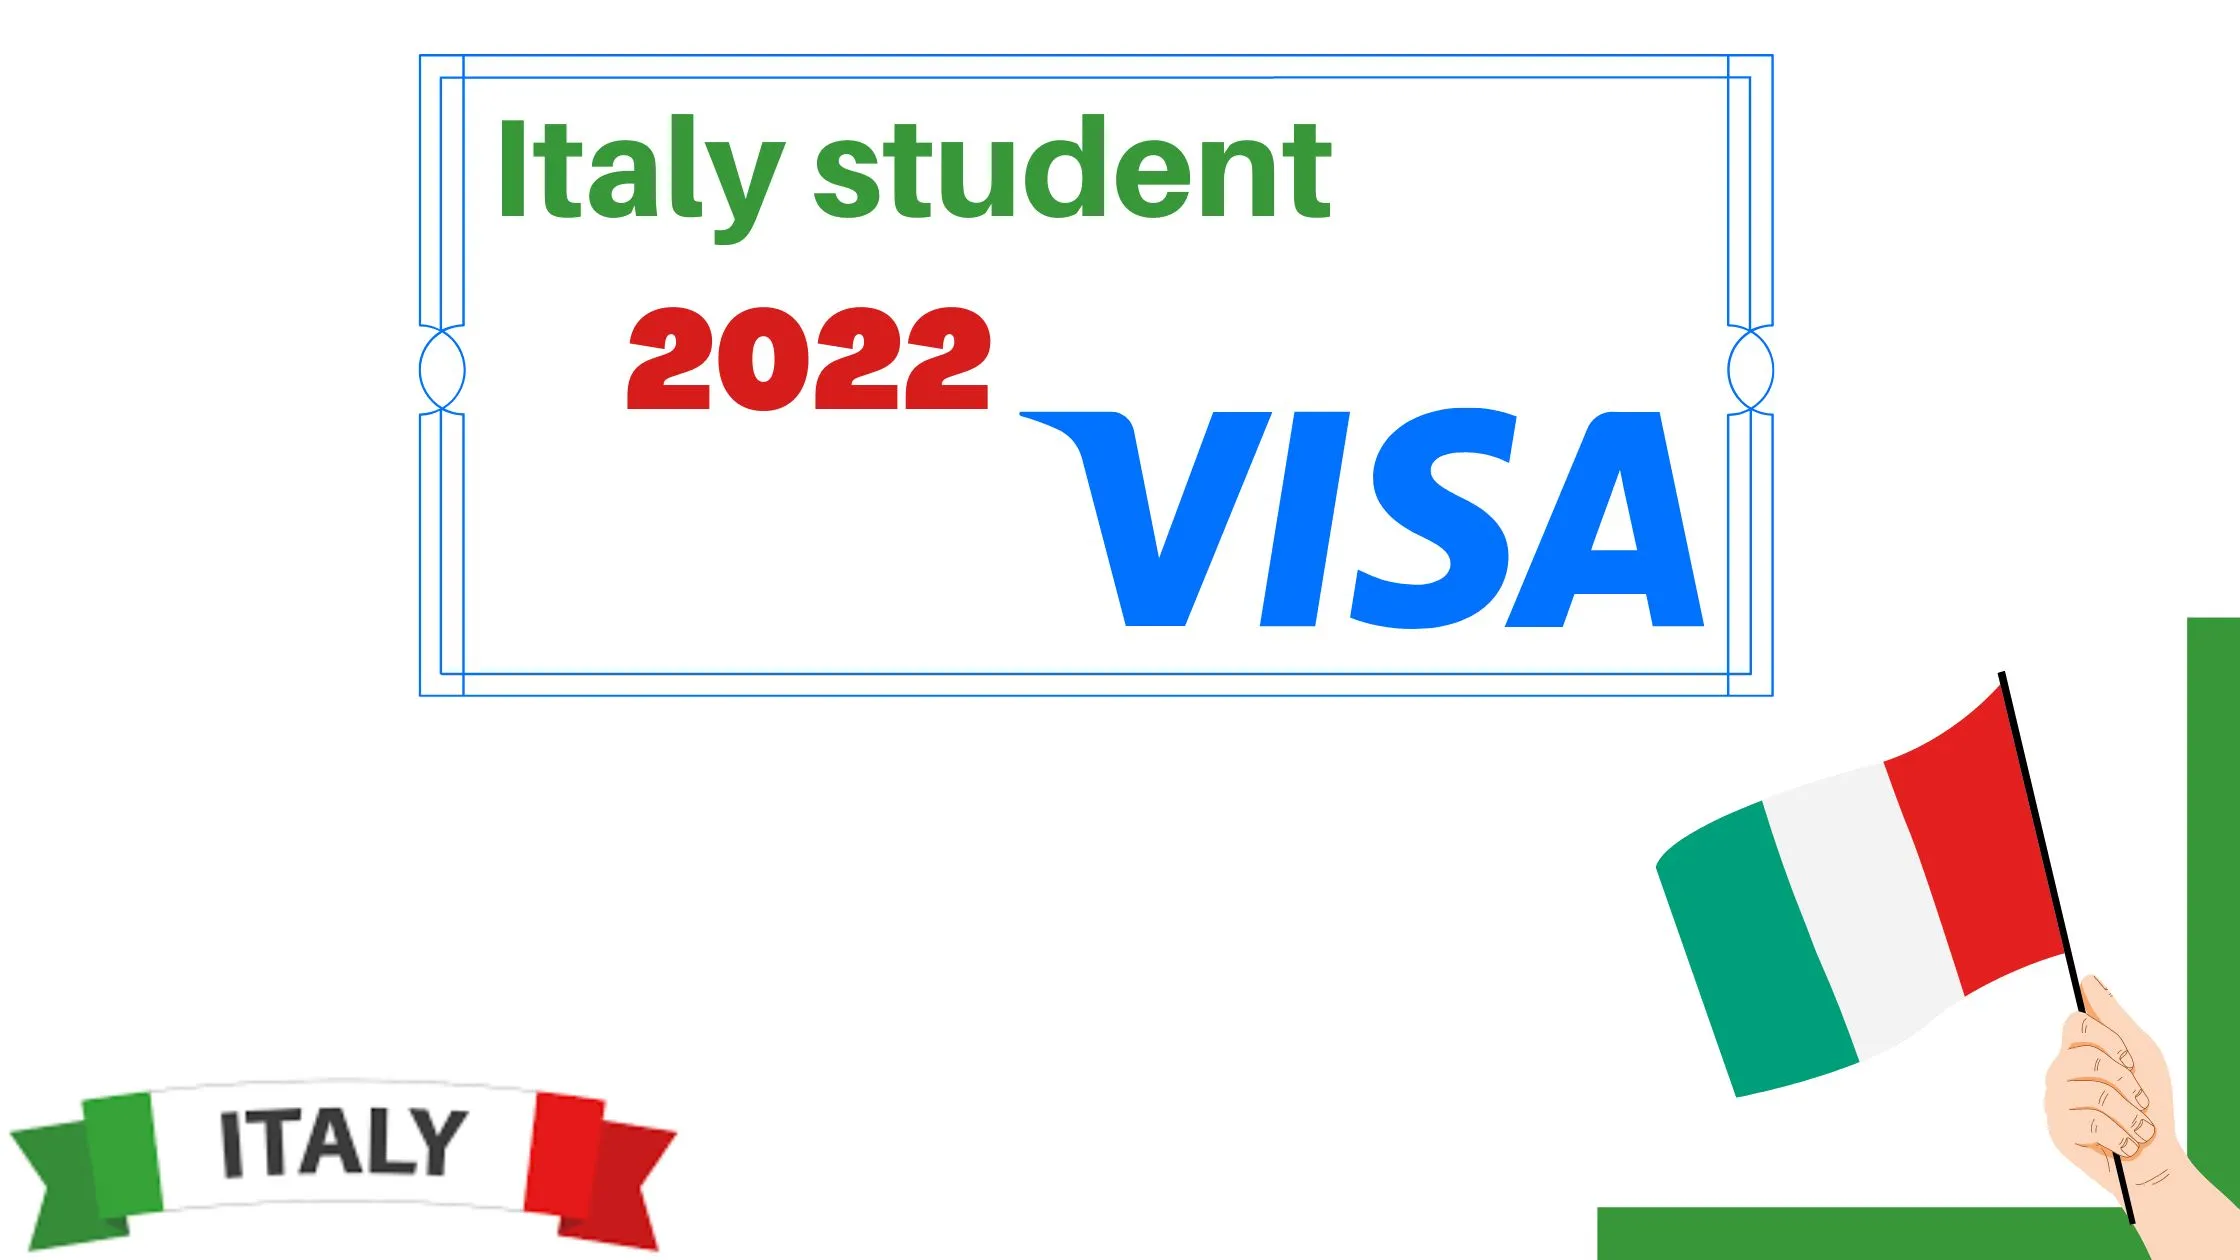 Italy student visa 2022